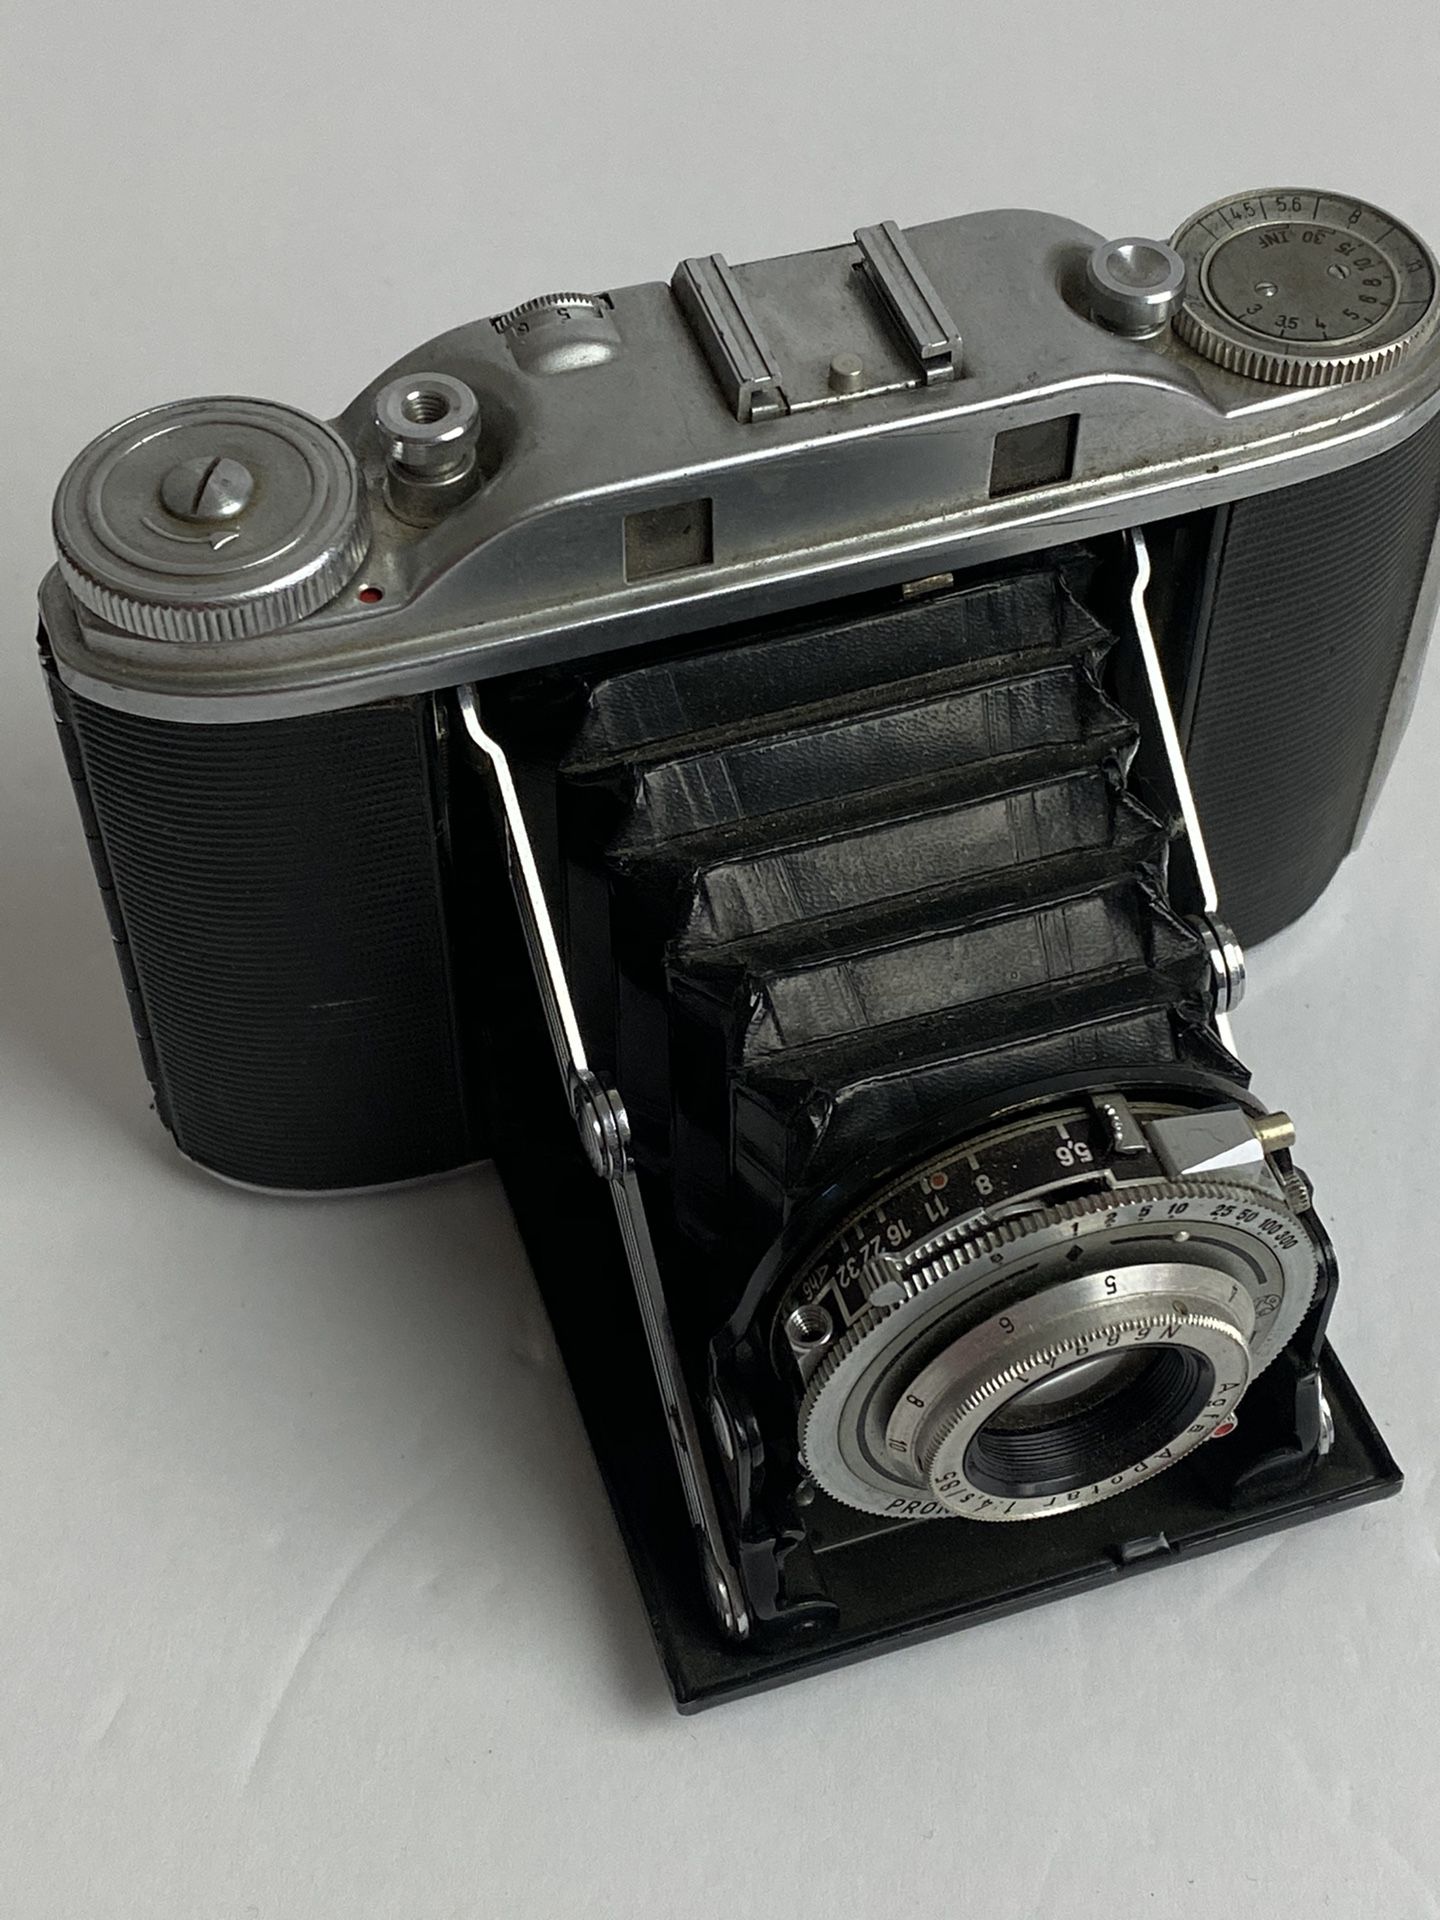 Ansco Speedex Special “R” folding camera